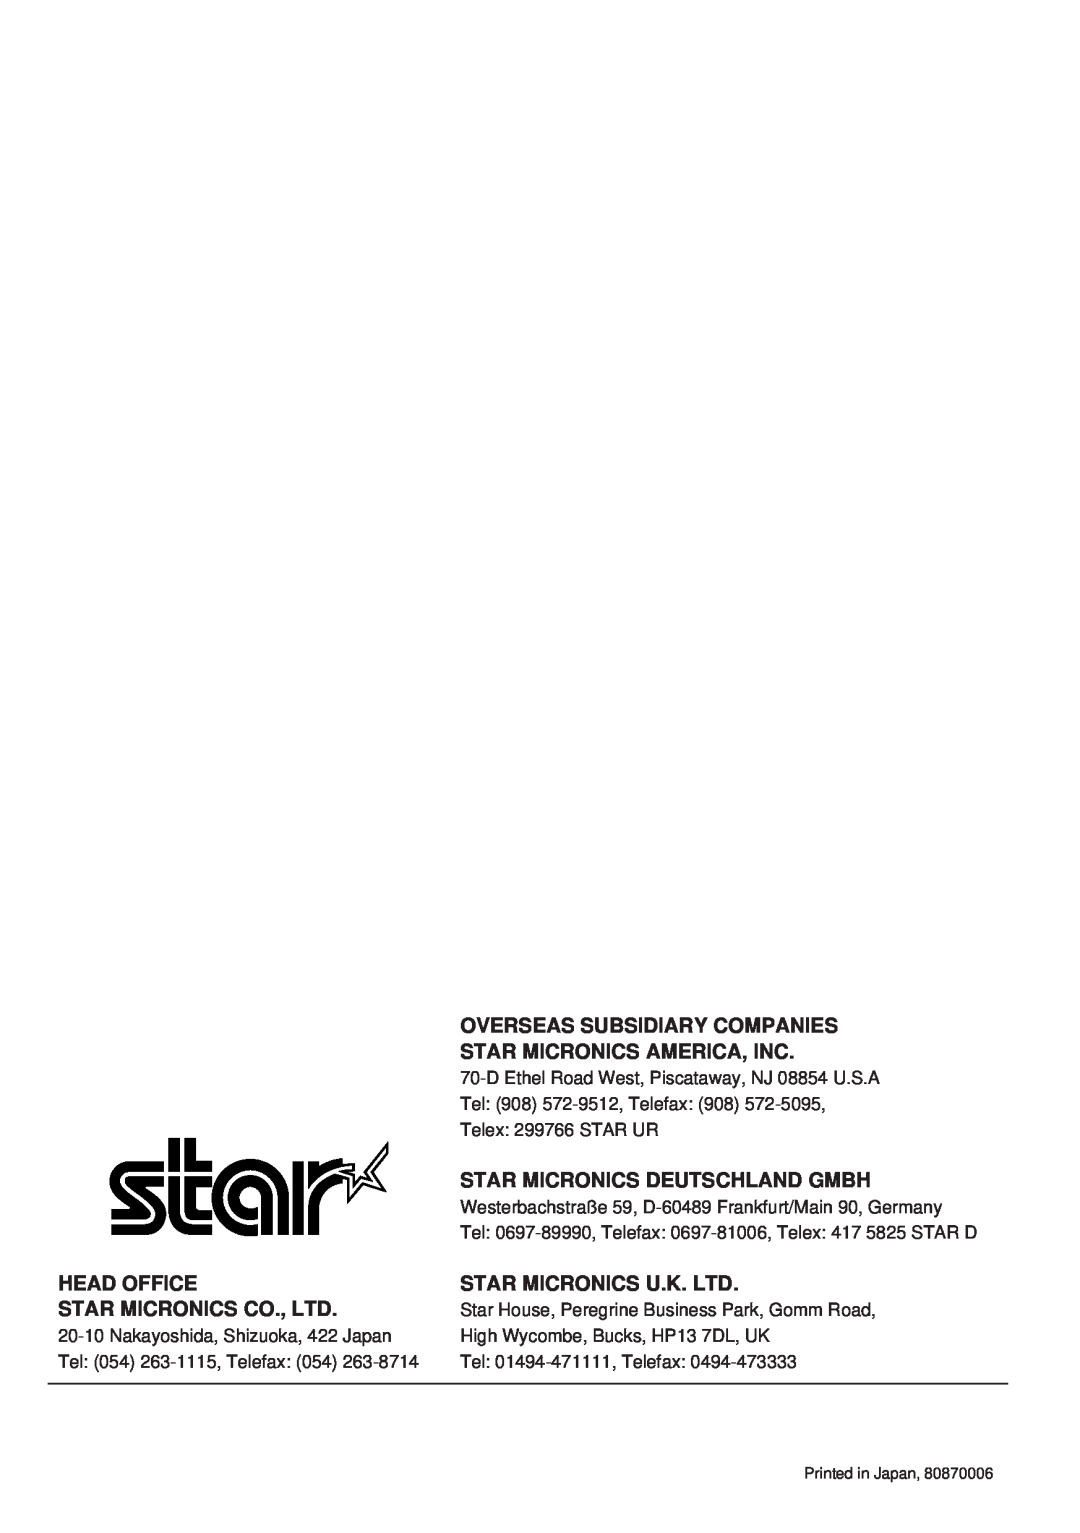 Star Micronics 347F user manual Overseas Subsidiary Companies Star Micronics America, Inc, Star Micronics Deutschland Gmbh 